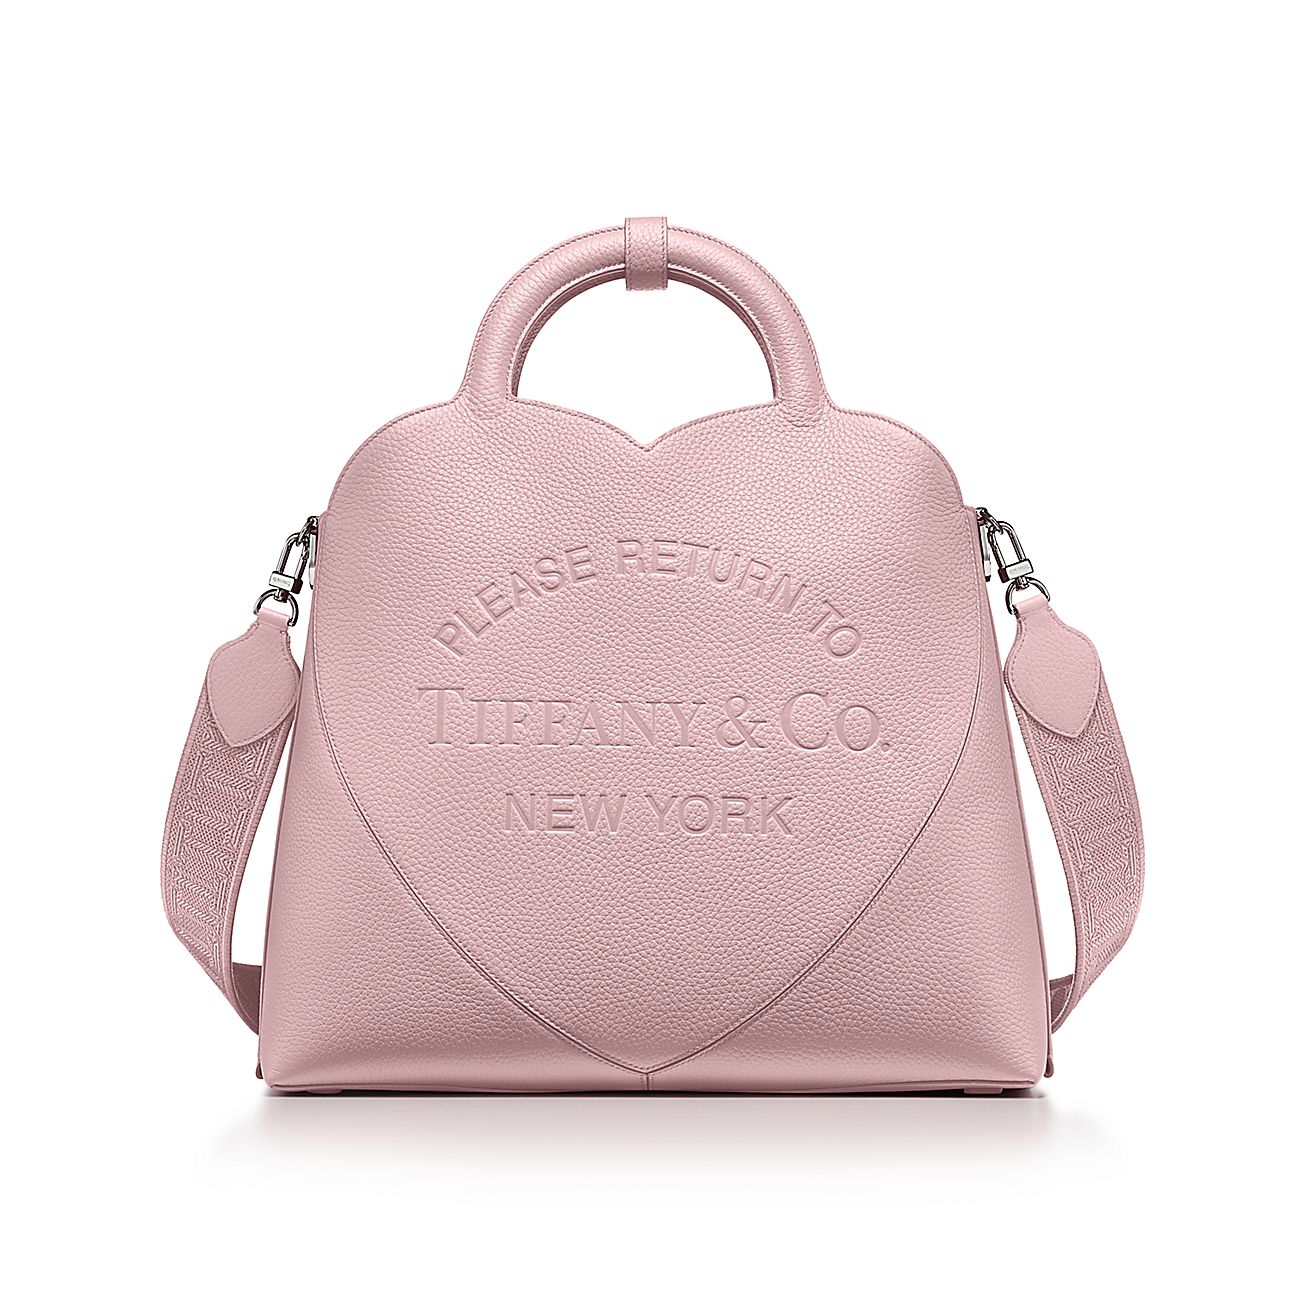 Tiffany & Co., Bags, Tiffany Co Bag